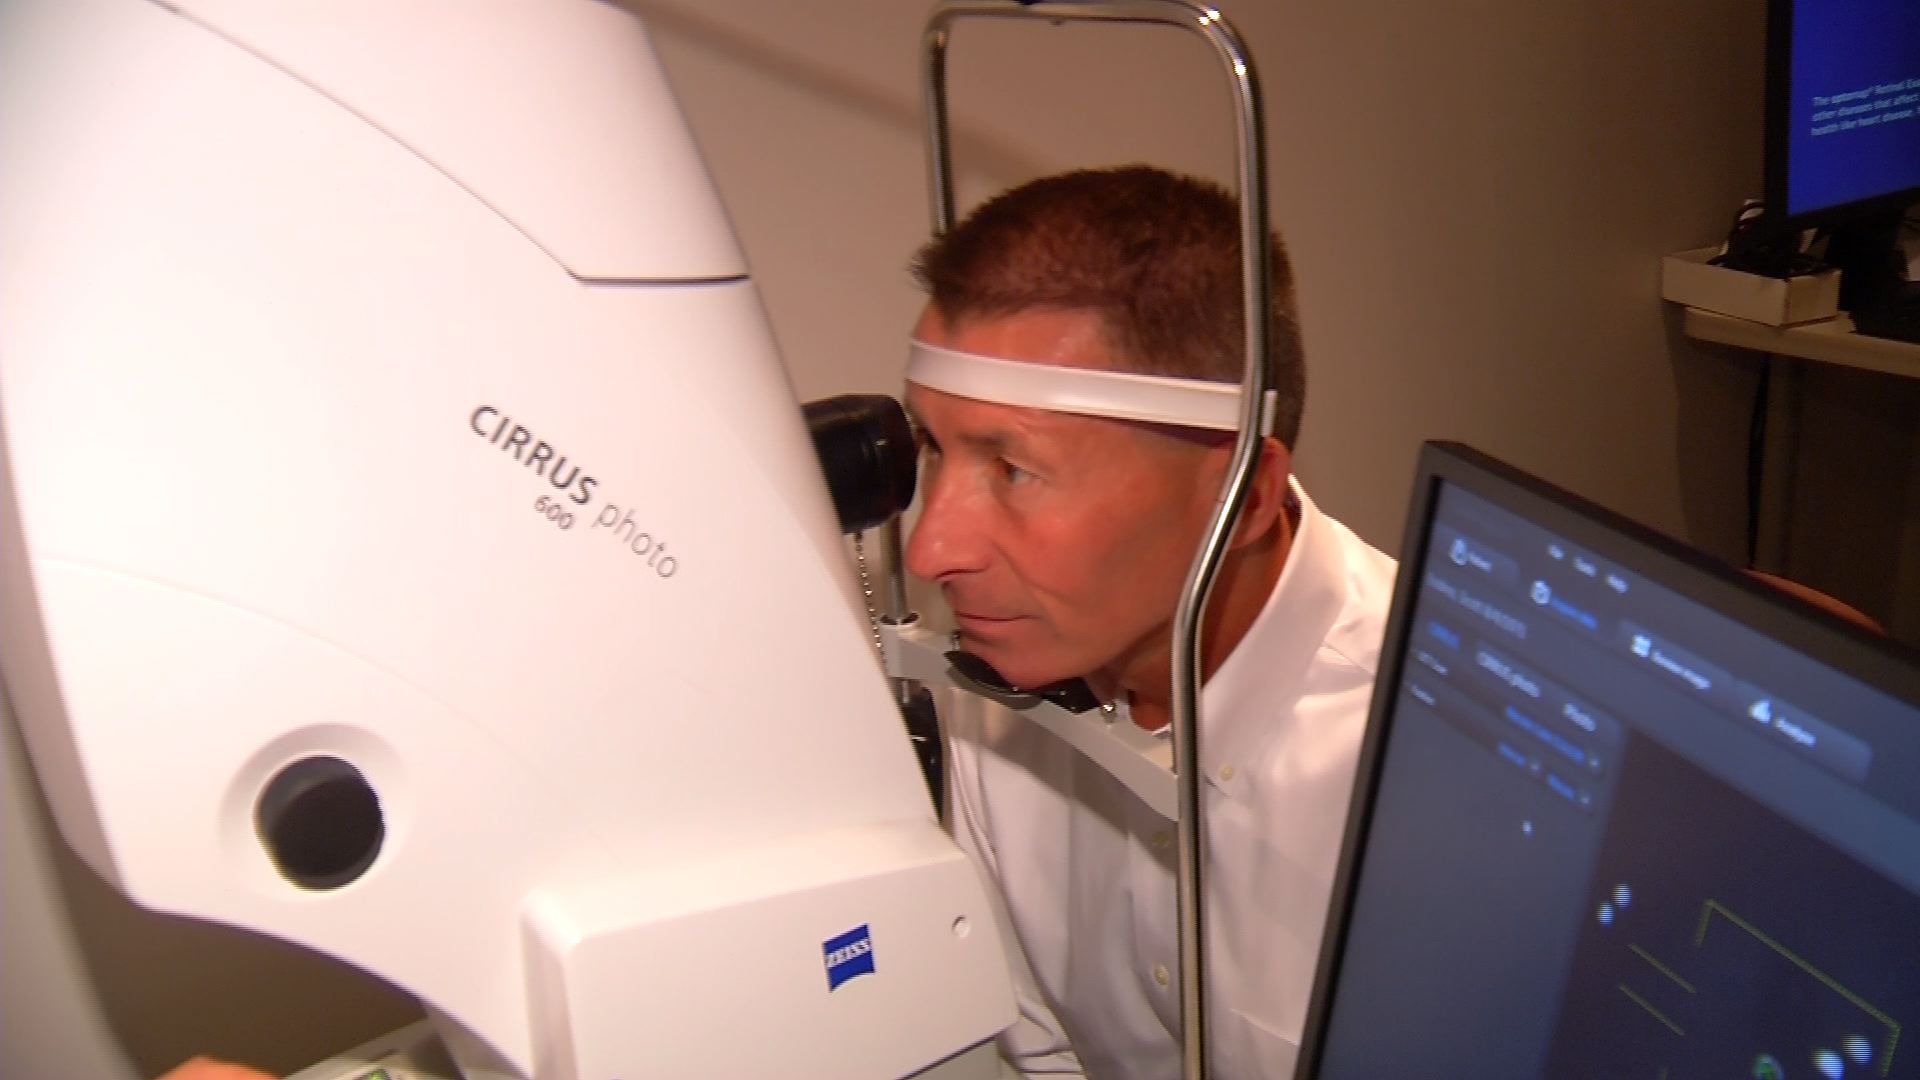 Advanced Retinal Imagining Analysis